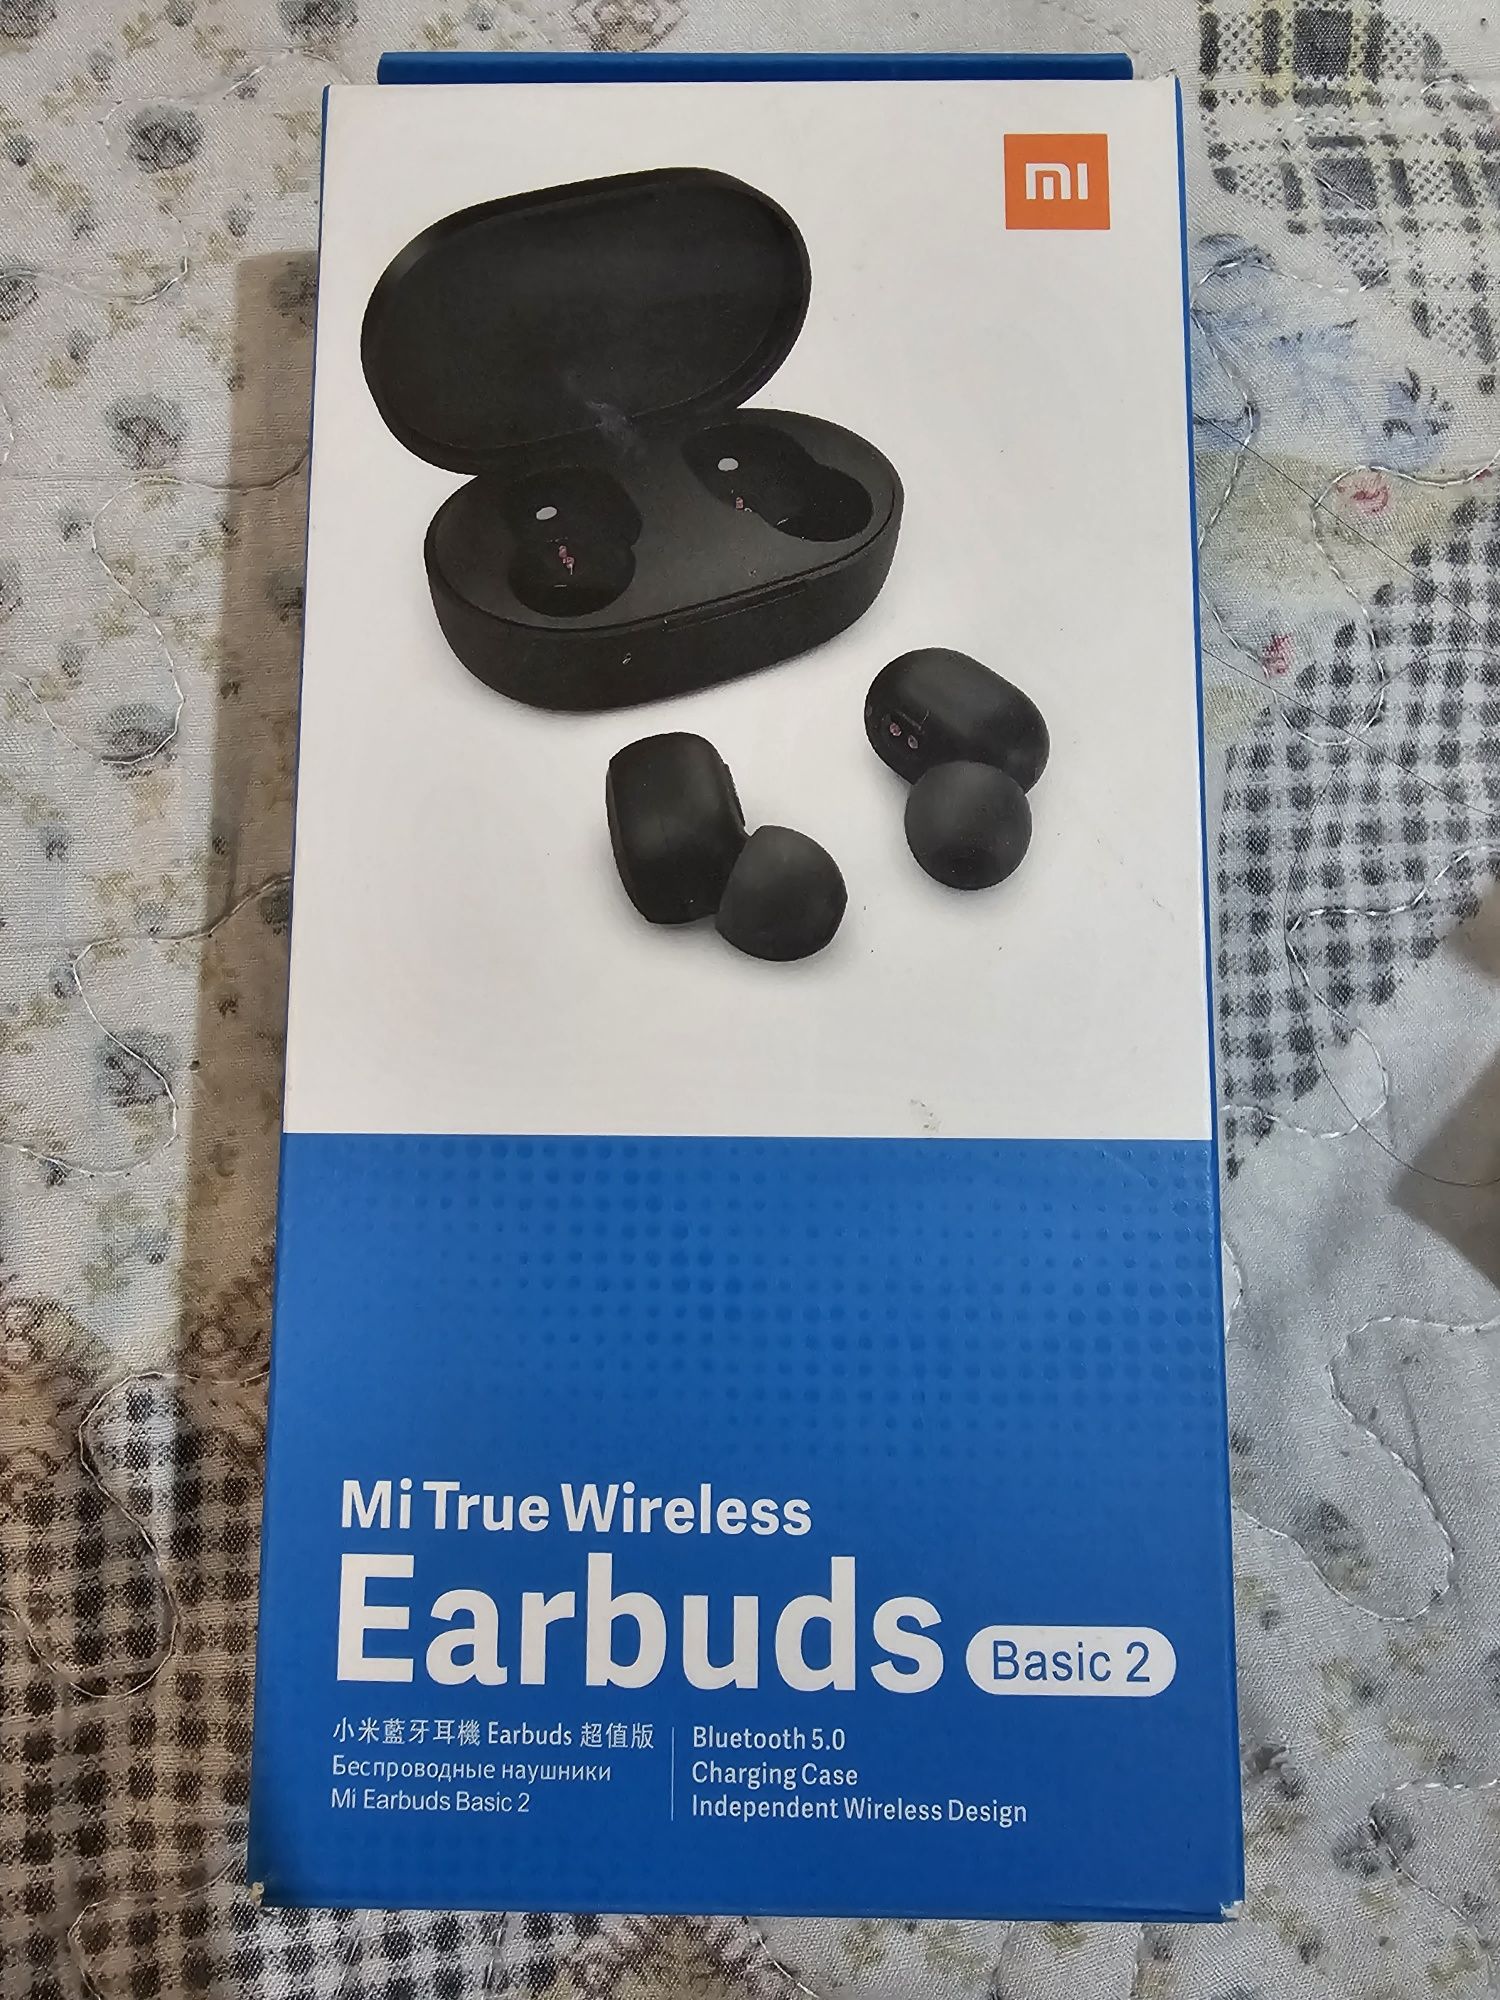 Ear buds basic 2, Air pods sotiladi